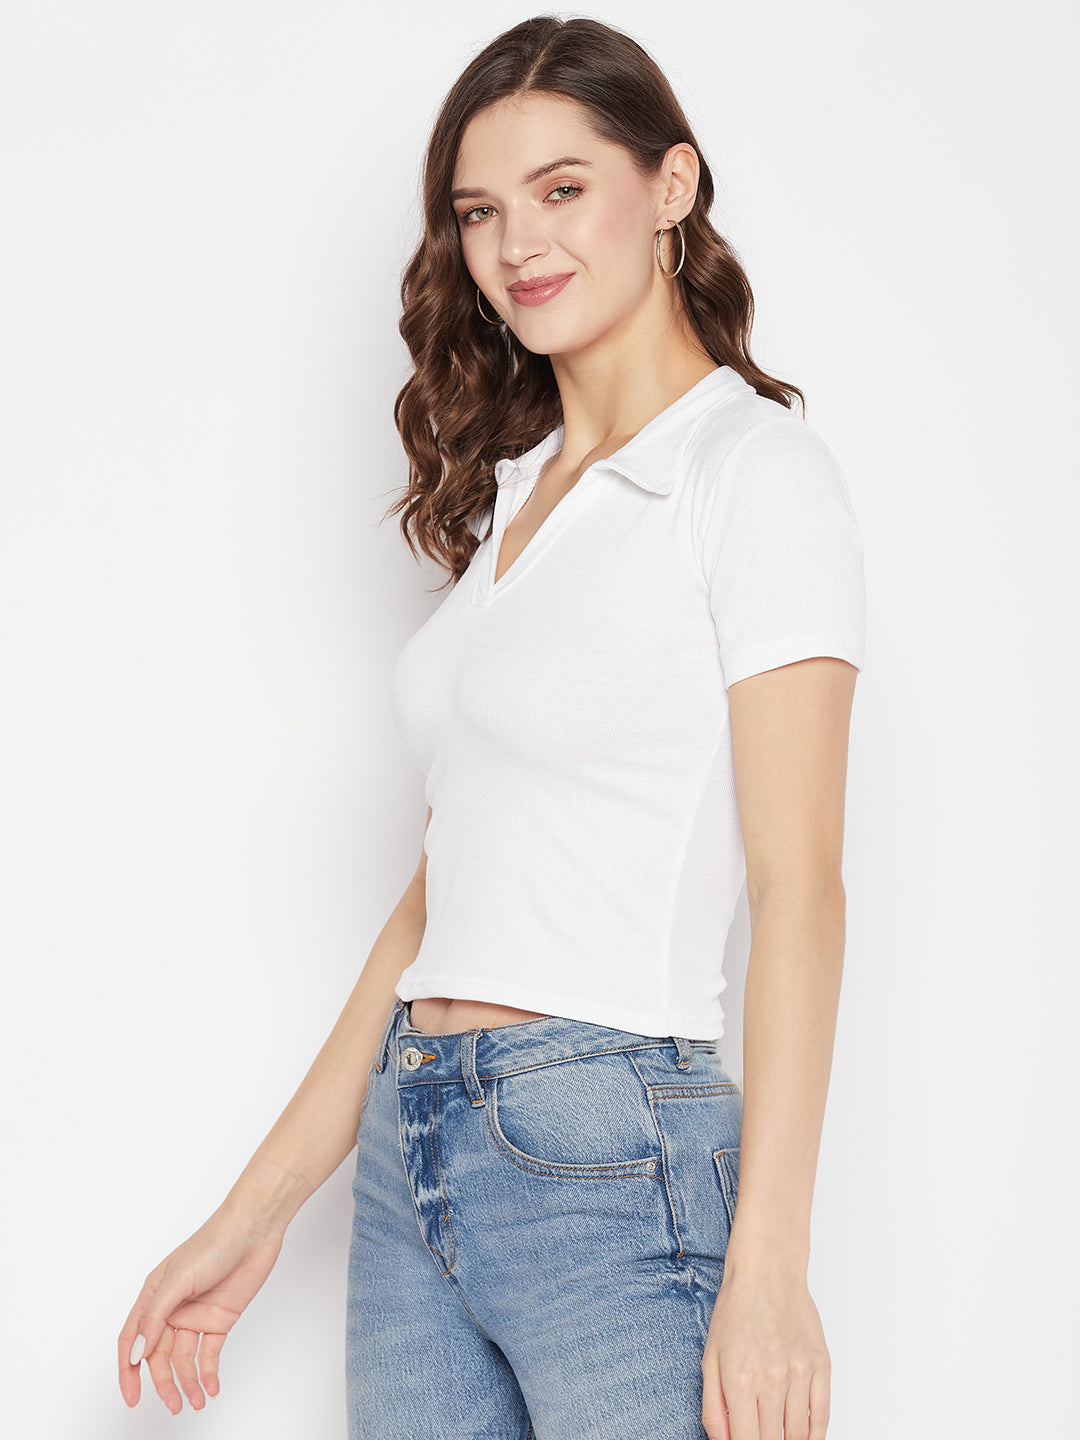 Clora White Solid Shirt Collar Crop Top